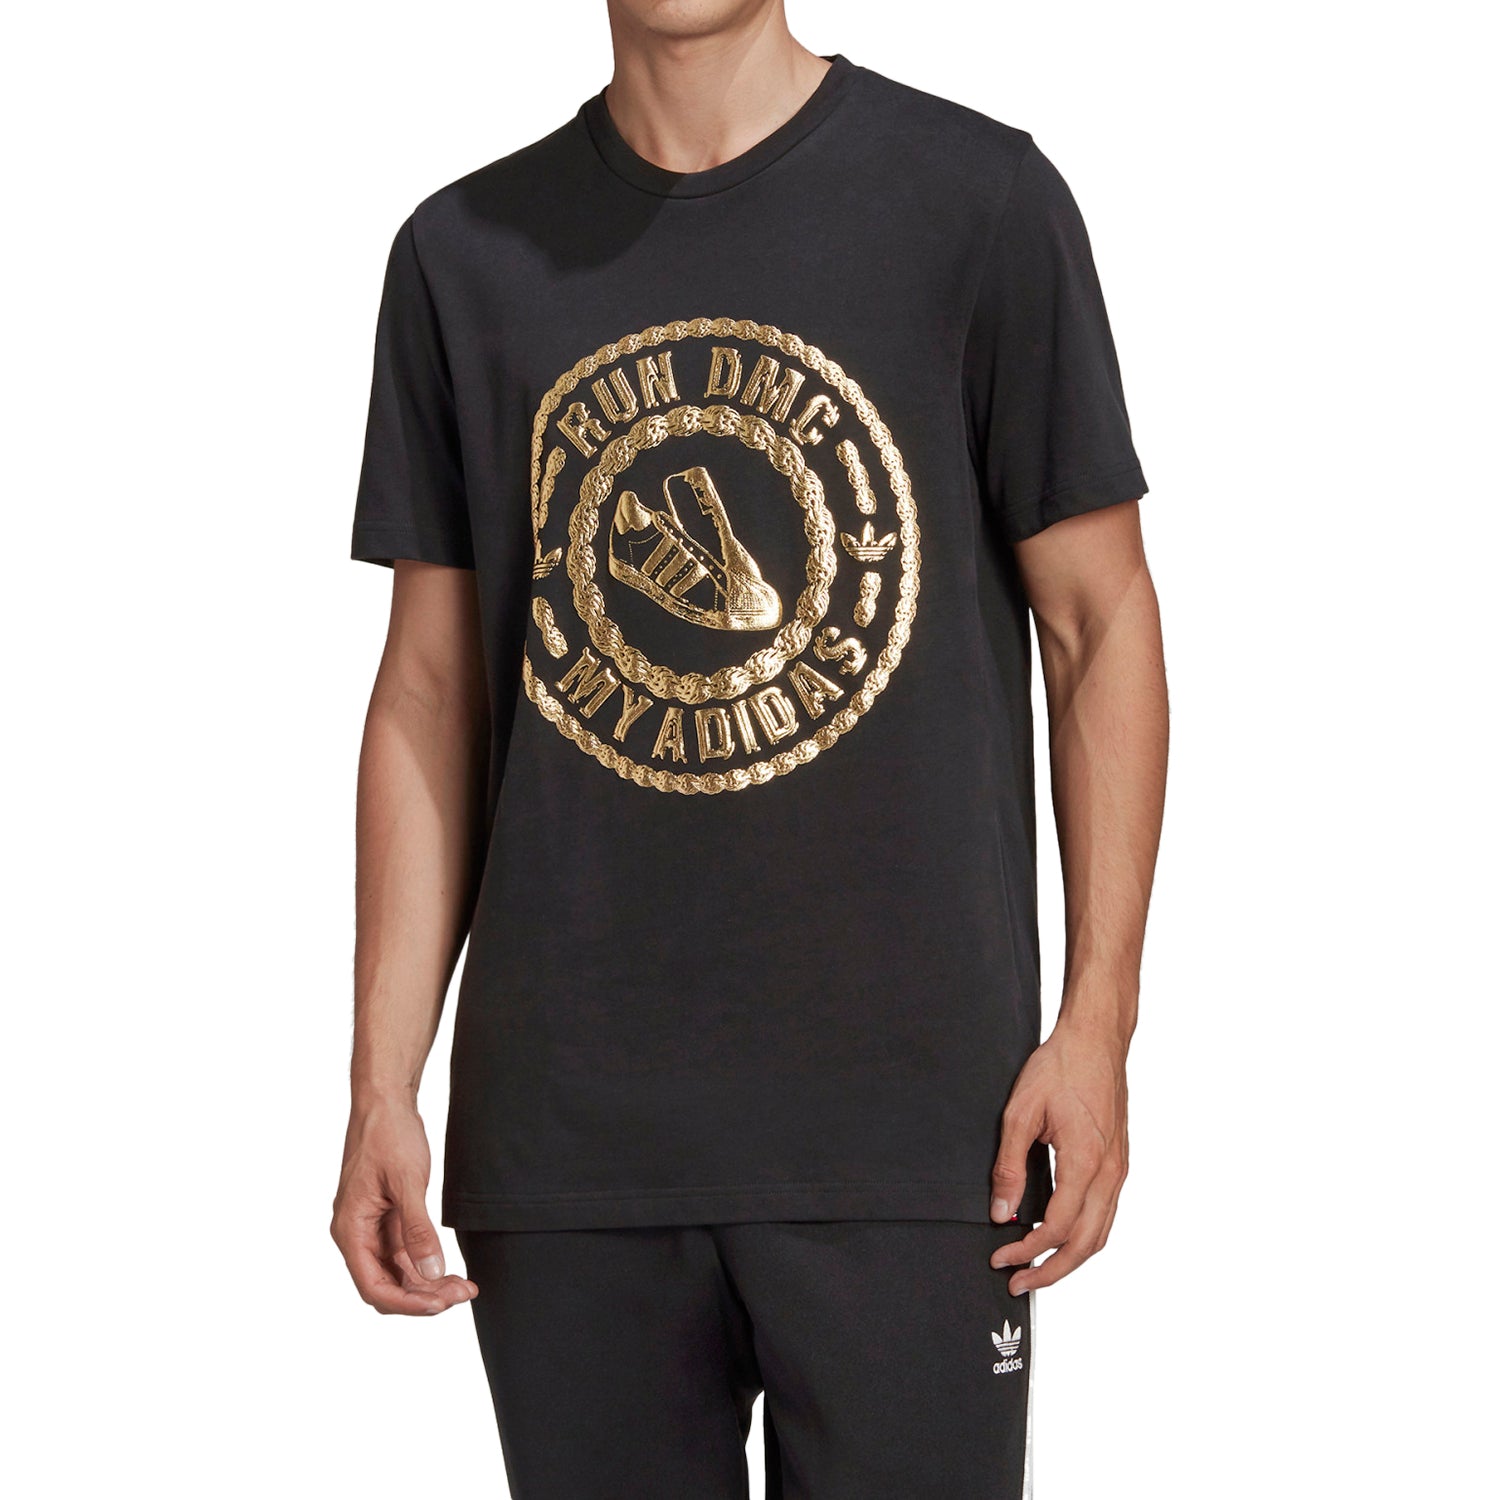 Adidas Run Dmc T-shirt Mens Style : Gt1763